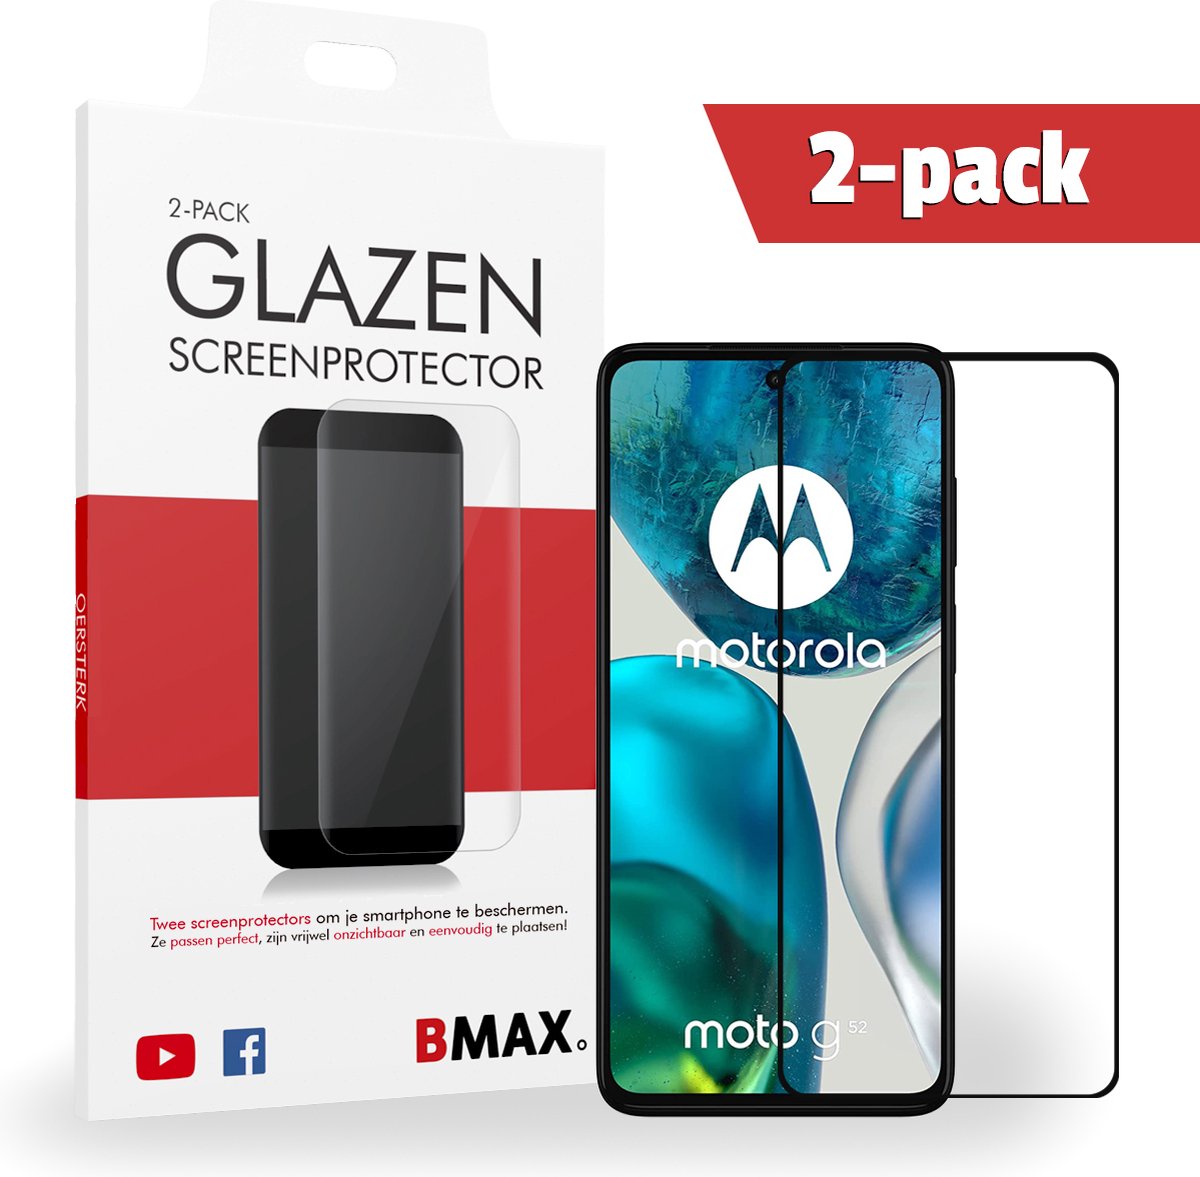 2-pack BMAX Motorola Moto G52 Screenprotector - Full Cover - Gehard glas - Tempered glas - Motorola screenprotectors 2 stuks - Telefoonglaasje - Beschermglas - Glasplaatje - Screensaver - Screen protector - Case friendly - Zwart